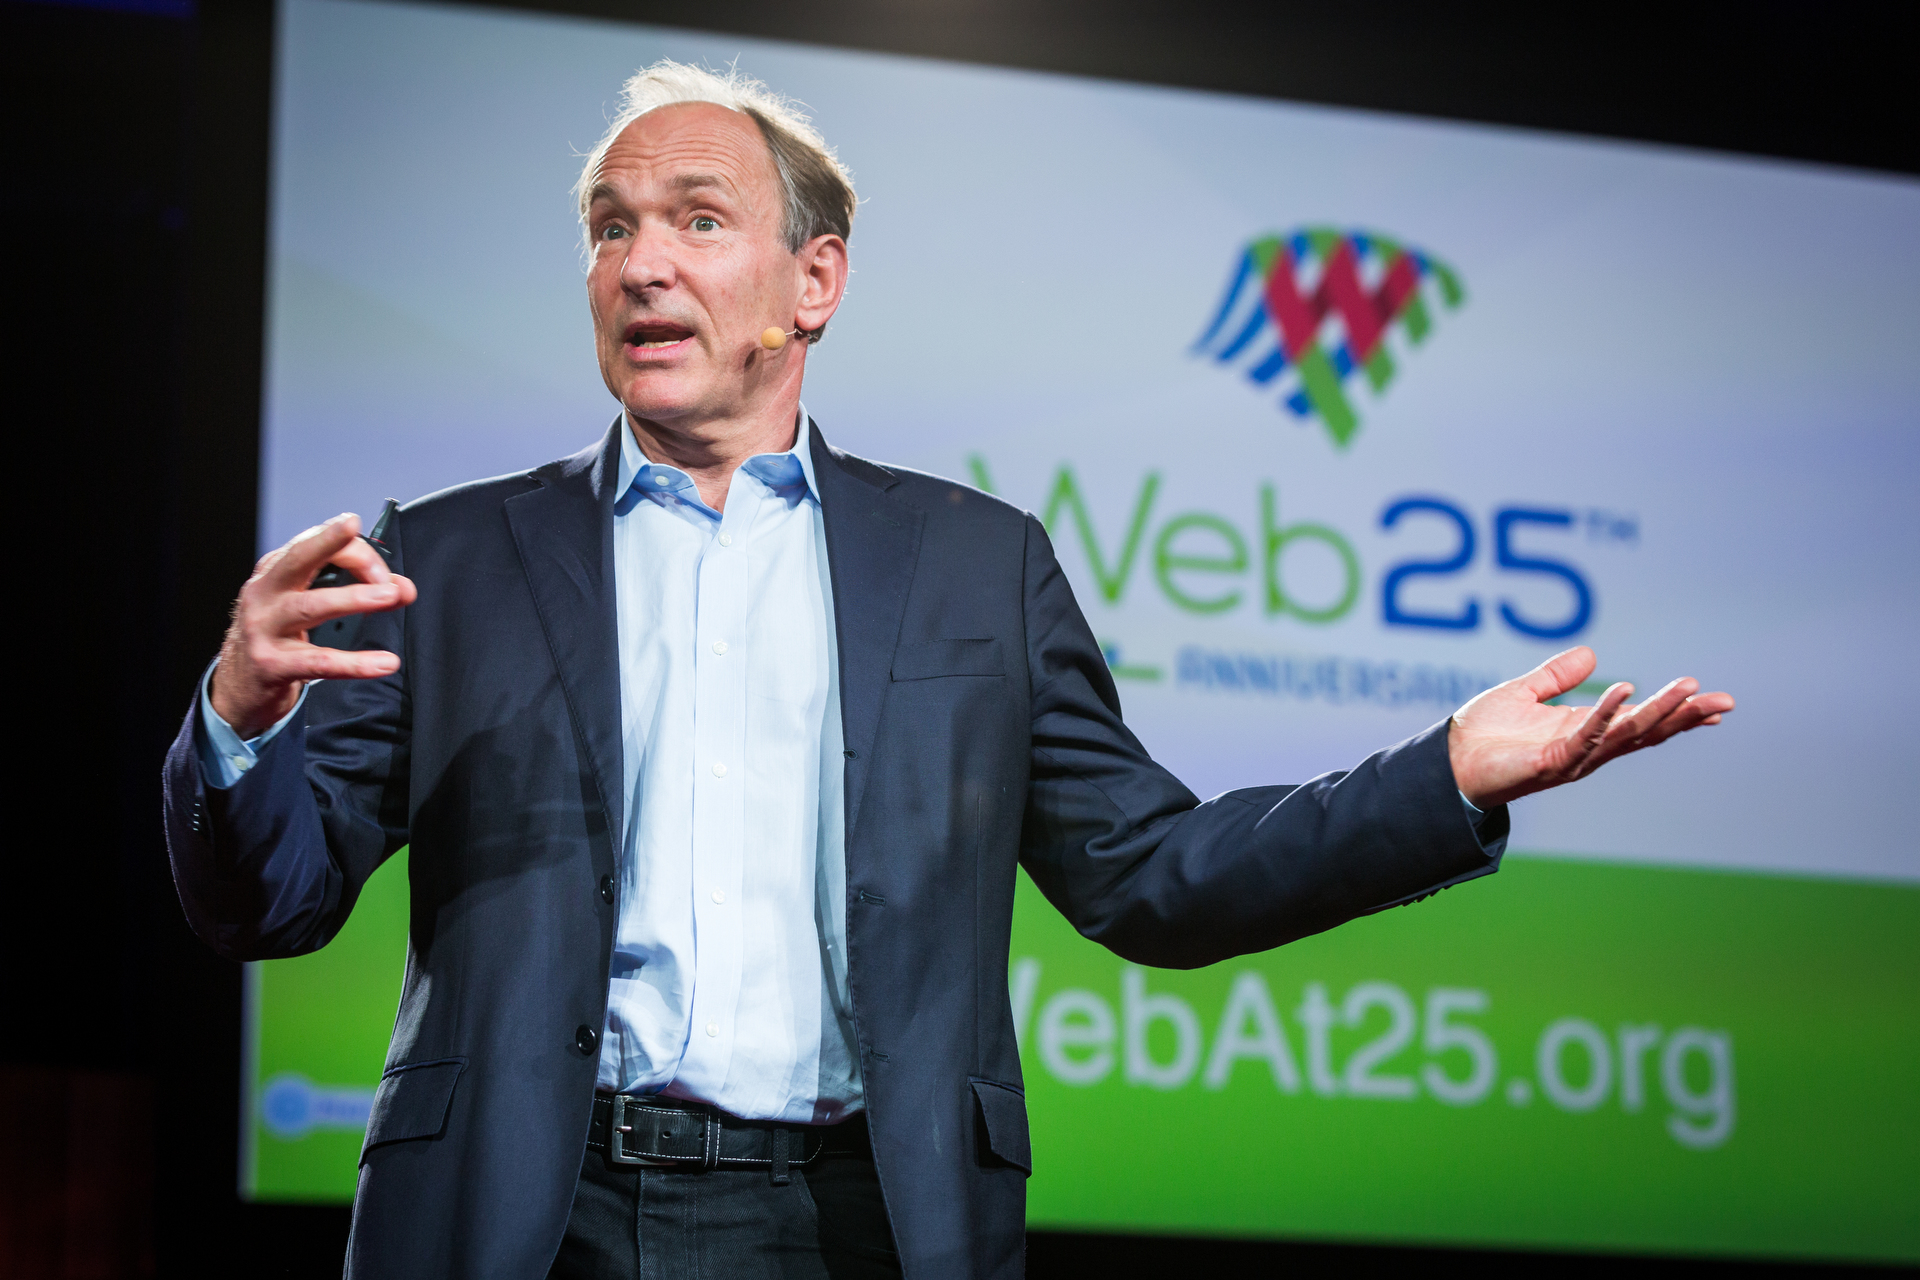 Sir Tim Berners-Lee. Photo: Bret Hartman